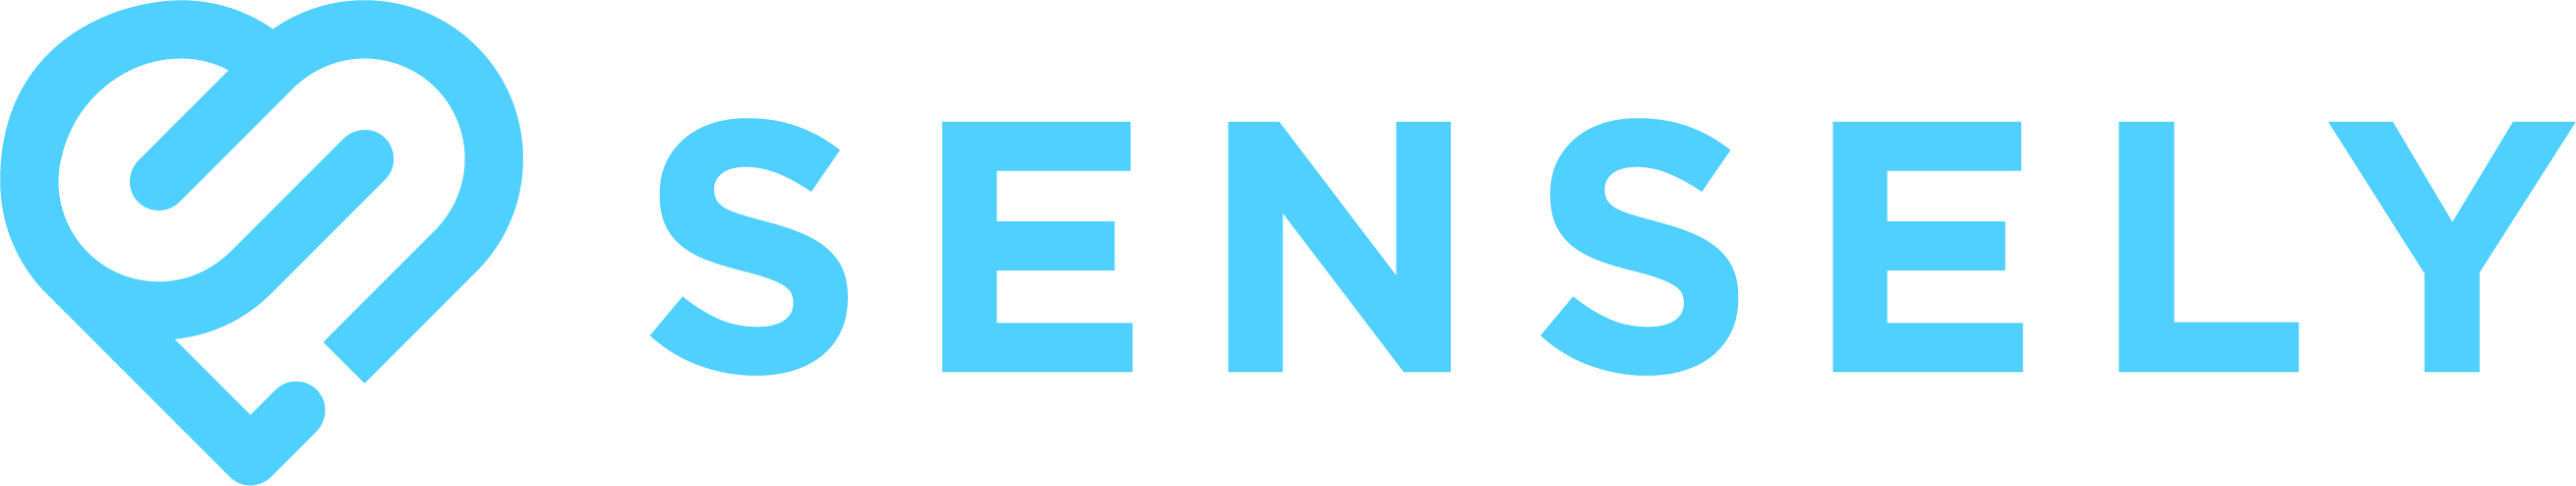 Sensely logo horizontal blue